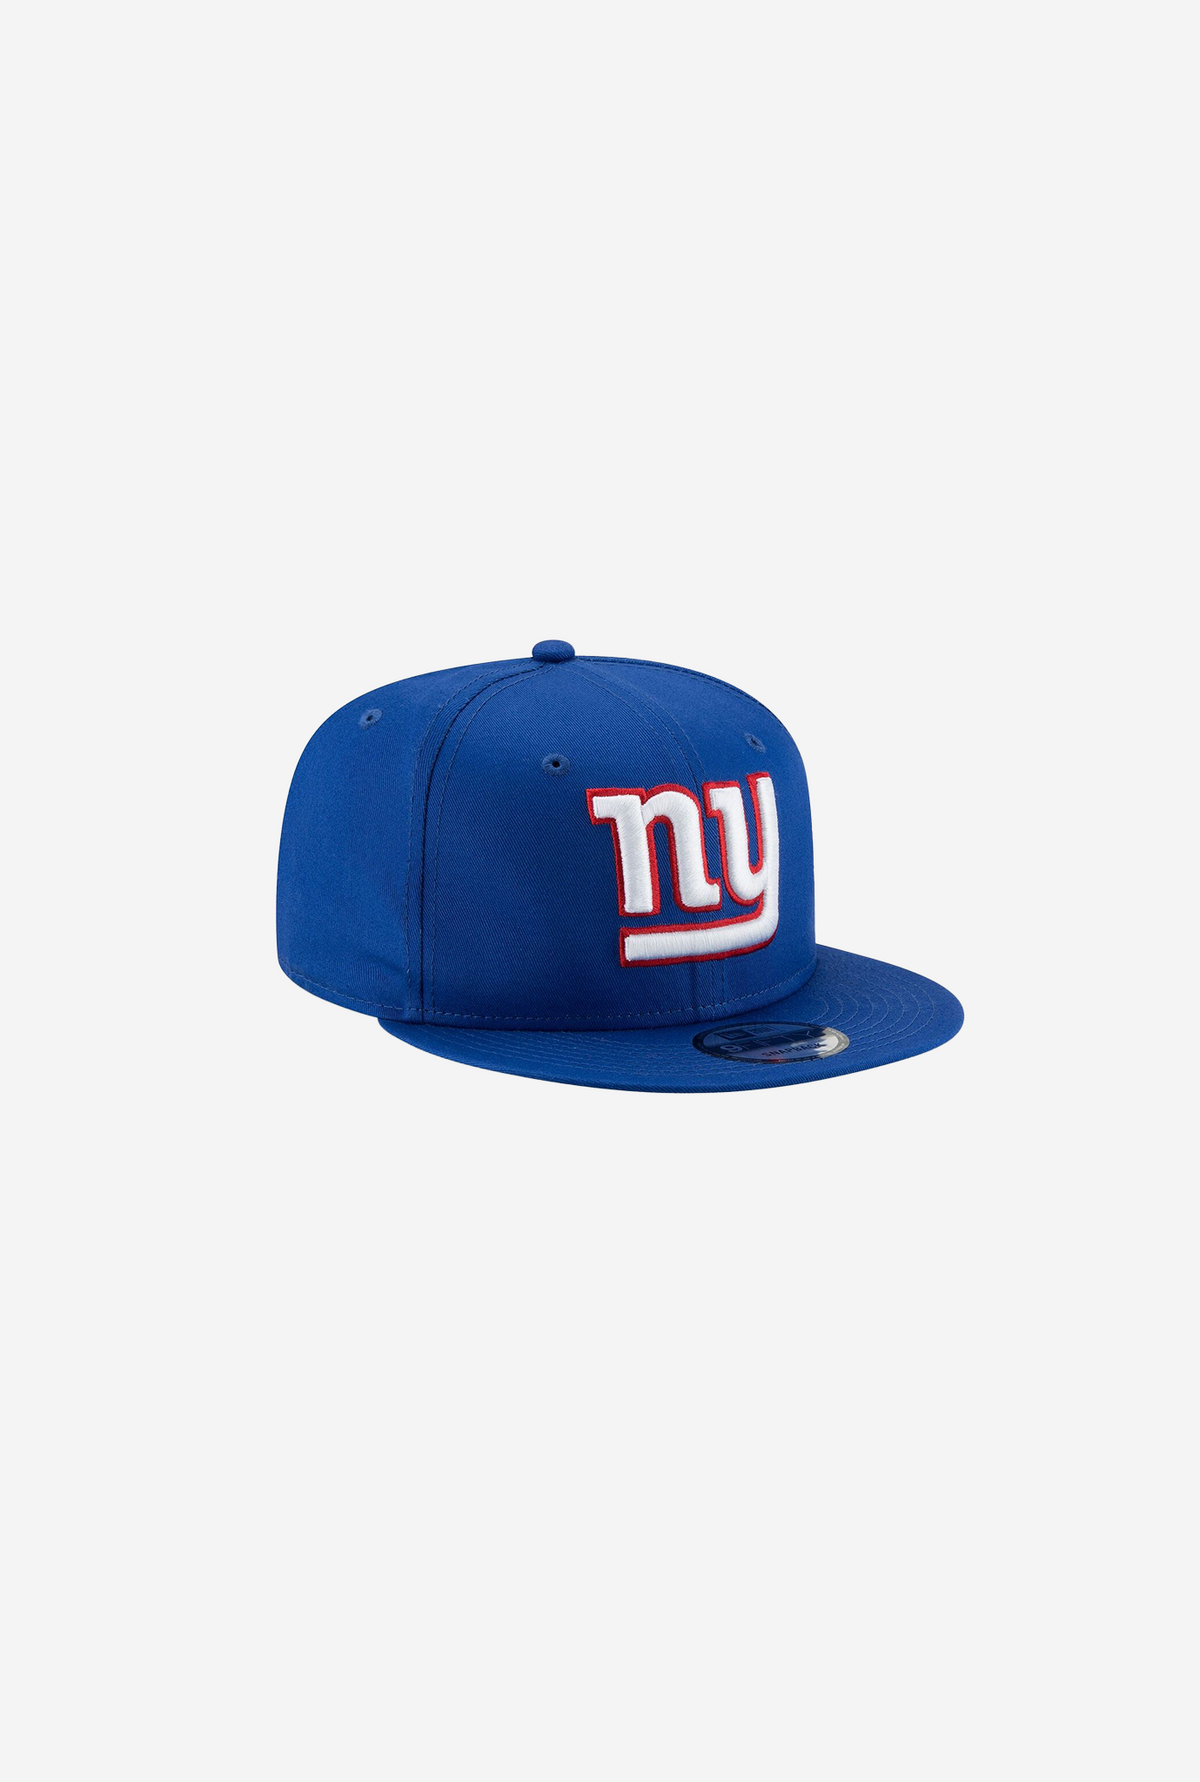 New York Giants Basic 9FIFTY Snapback